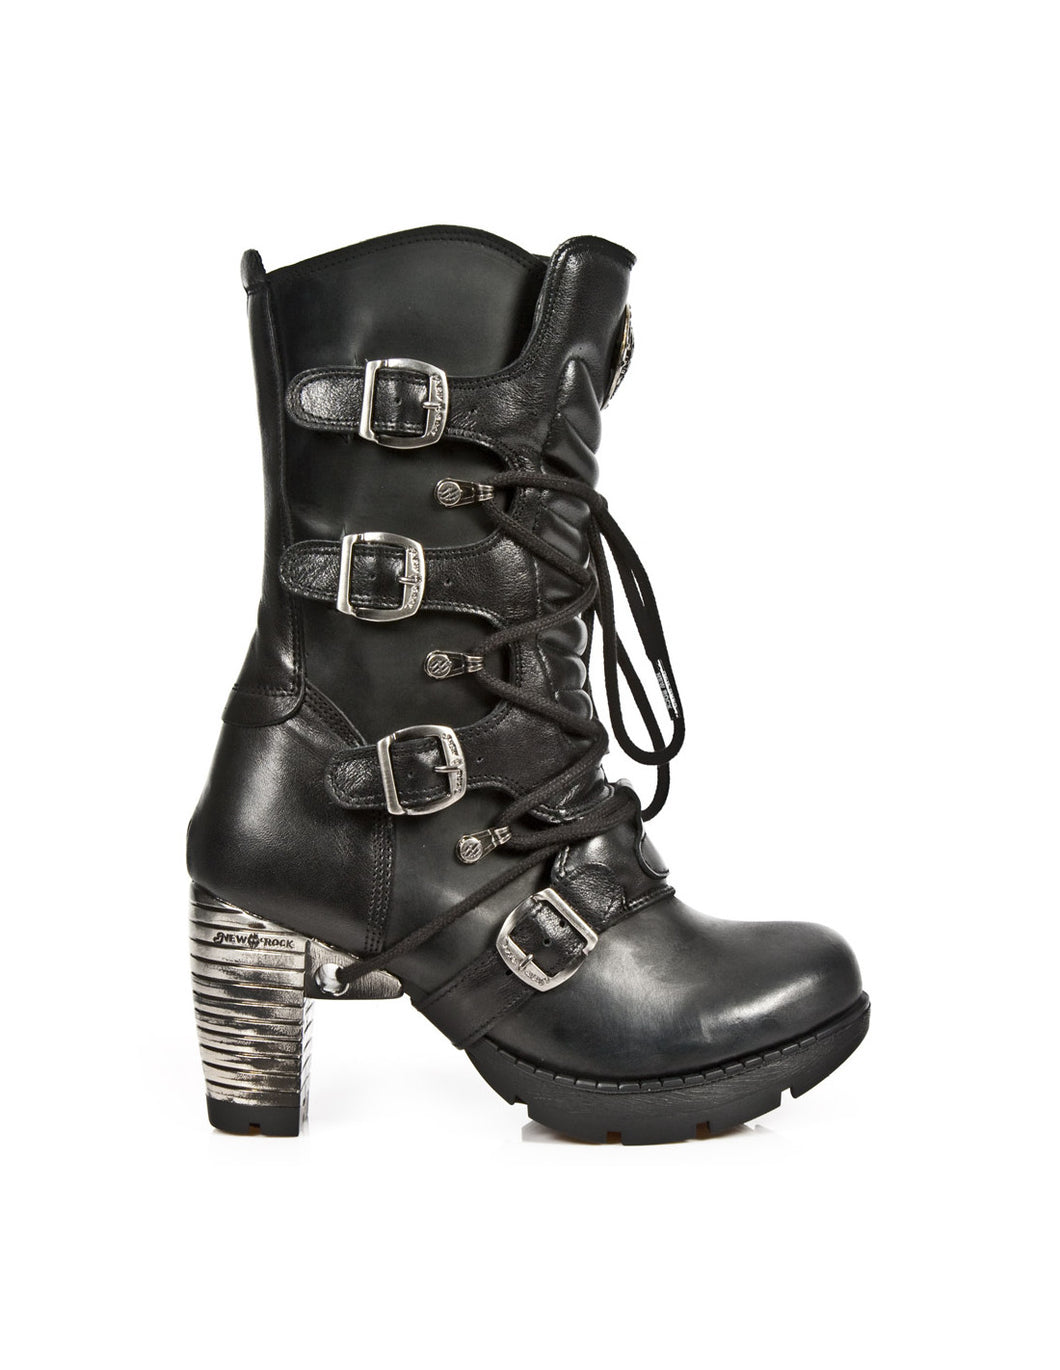 New Rock M-TR003-S1 Platform Genuine Leather Boots Black